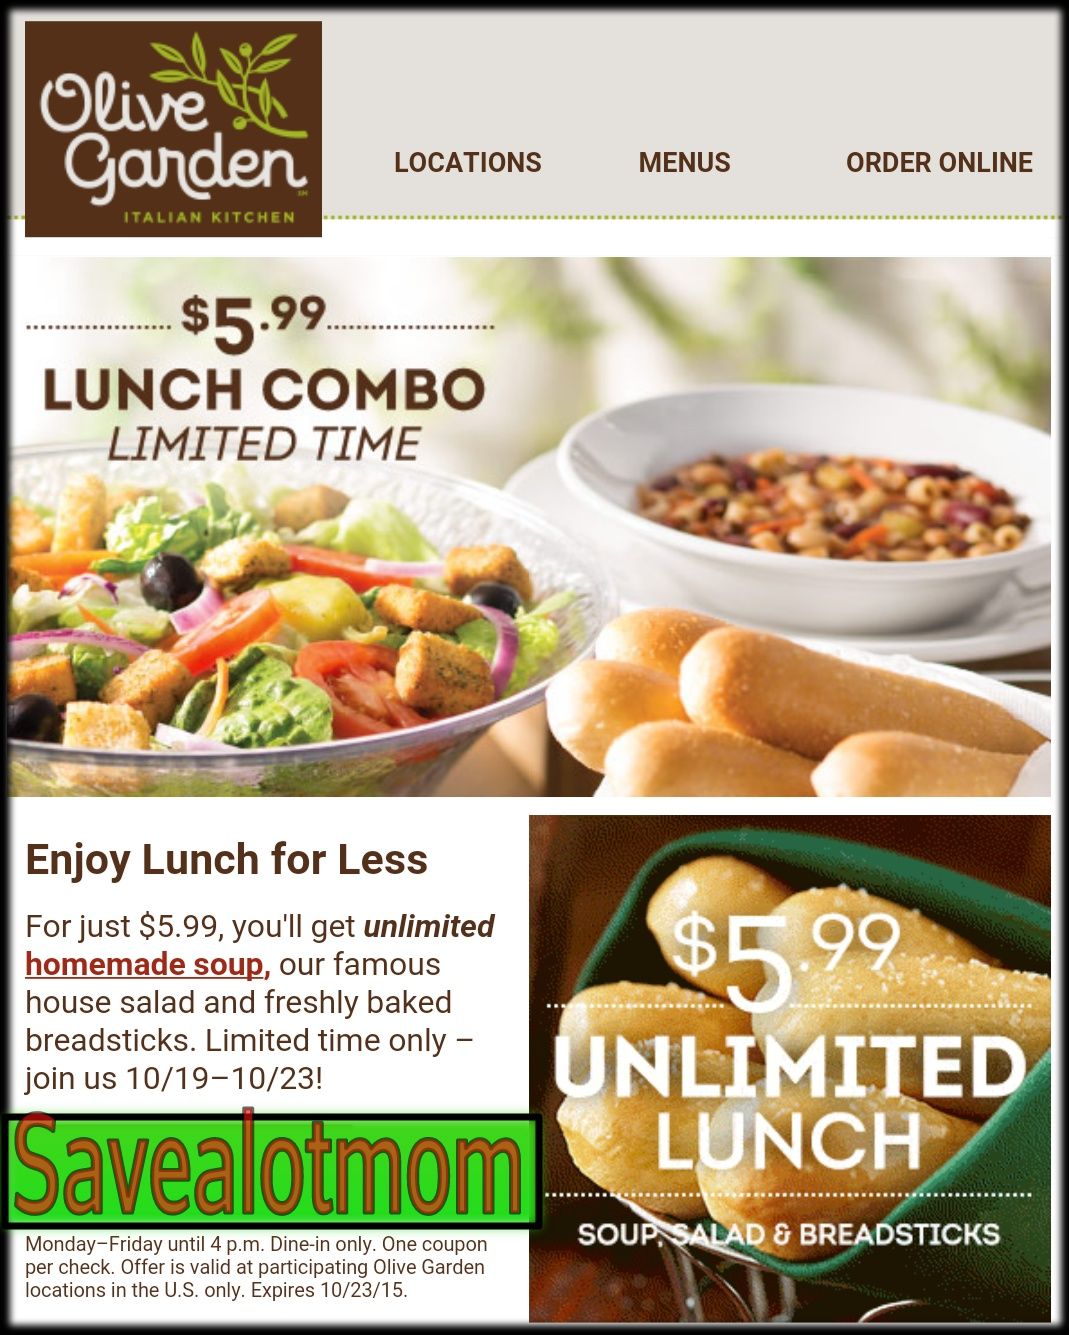 Olive Garden Unlimited Soup, Salad and Breadsticks for $5.99!